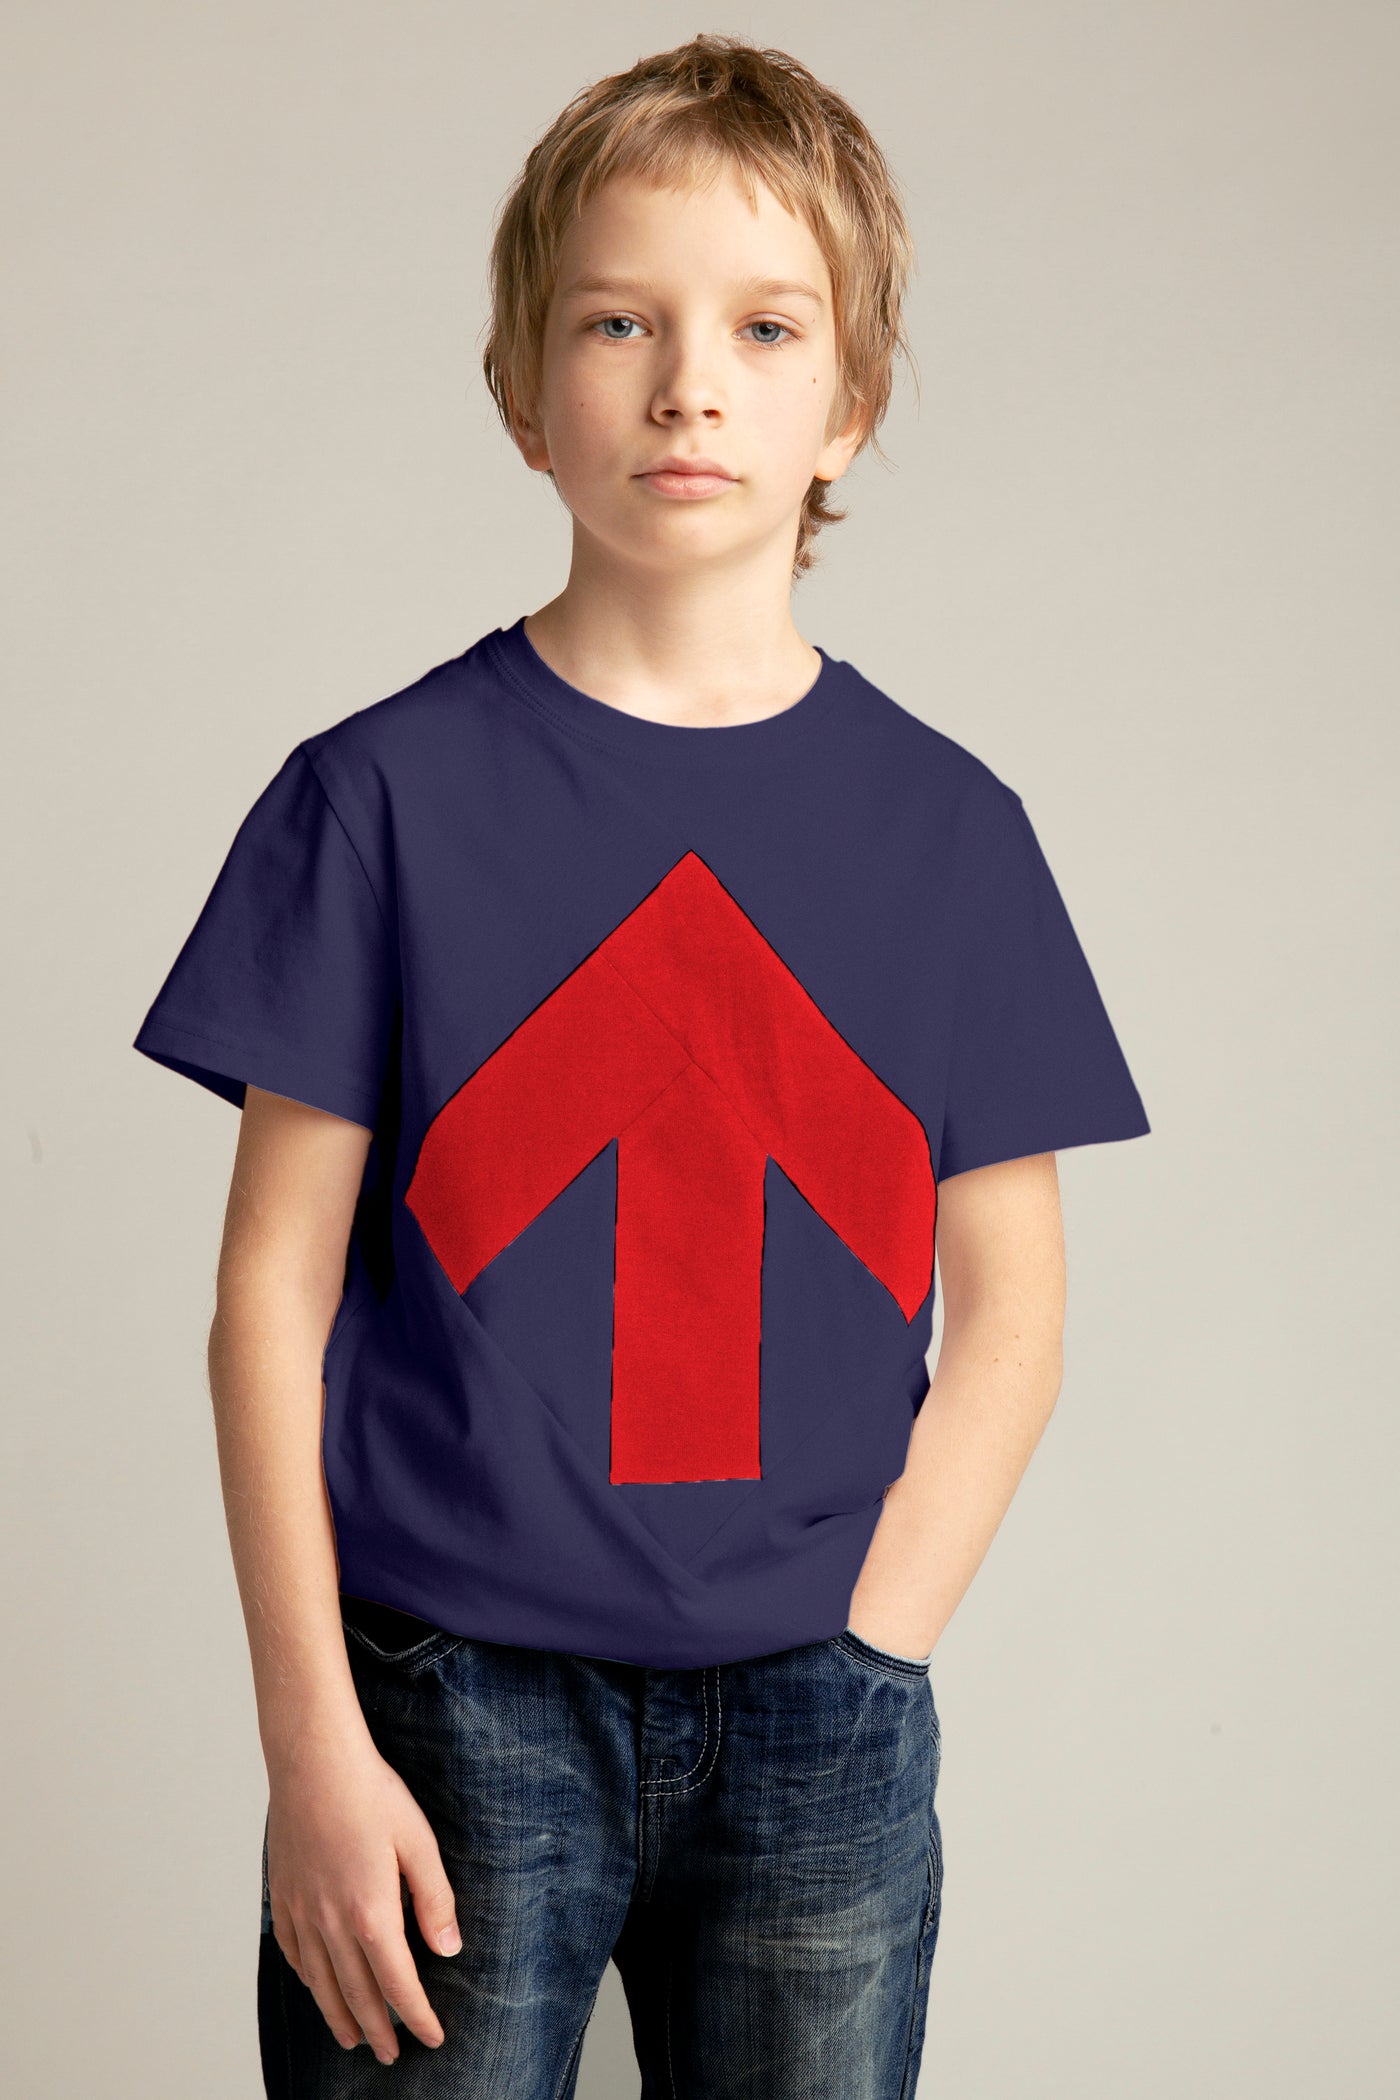 Up-Shirt für Kinder | Dunkelblau, Rot